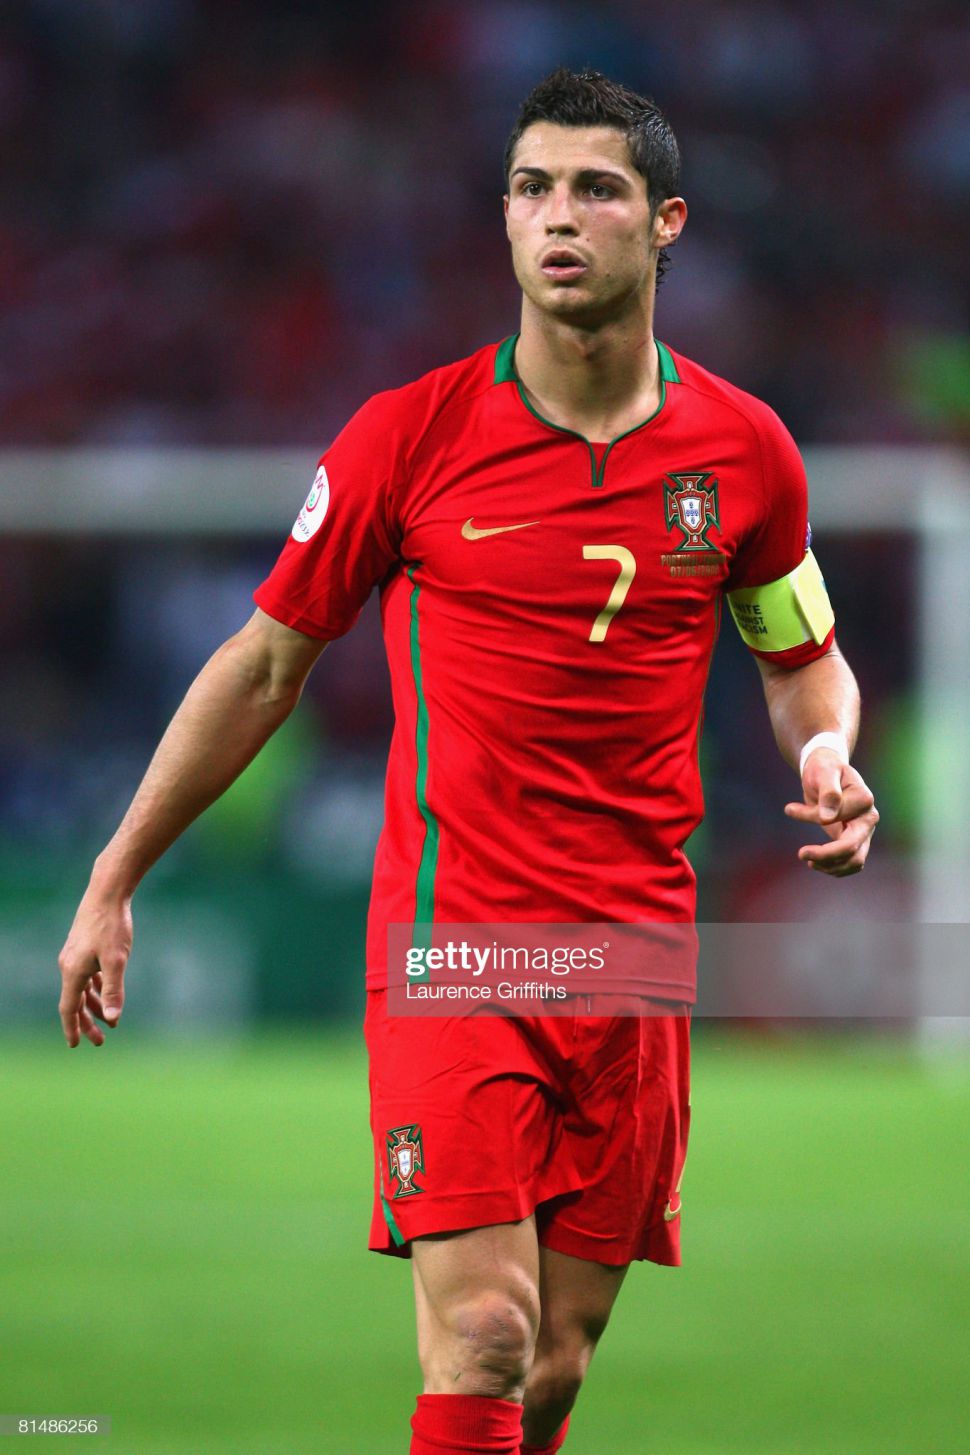 Áo Ronaldo 7 Portugal 2008-2009-2010 home shirt jersey red 265759 Nike